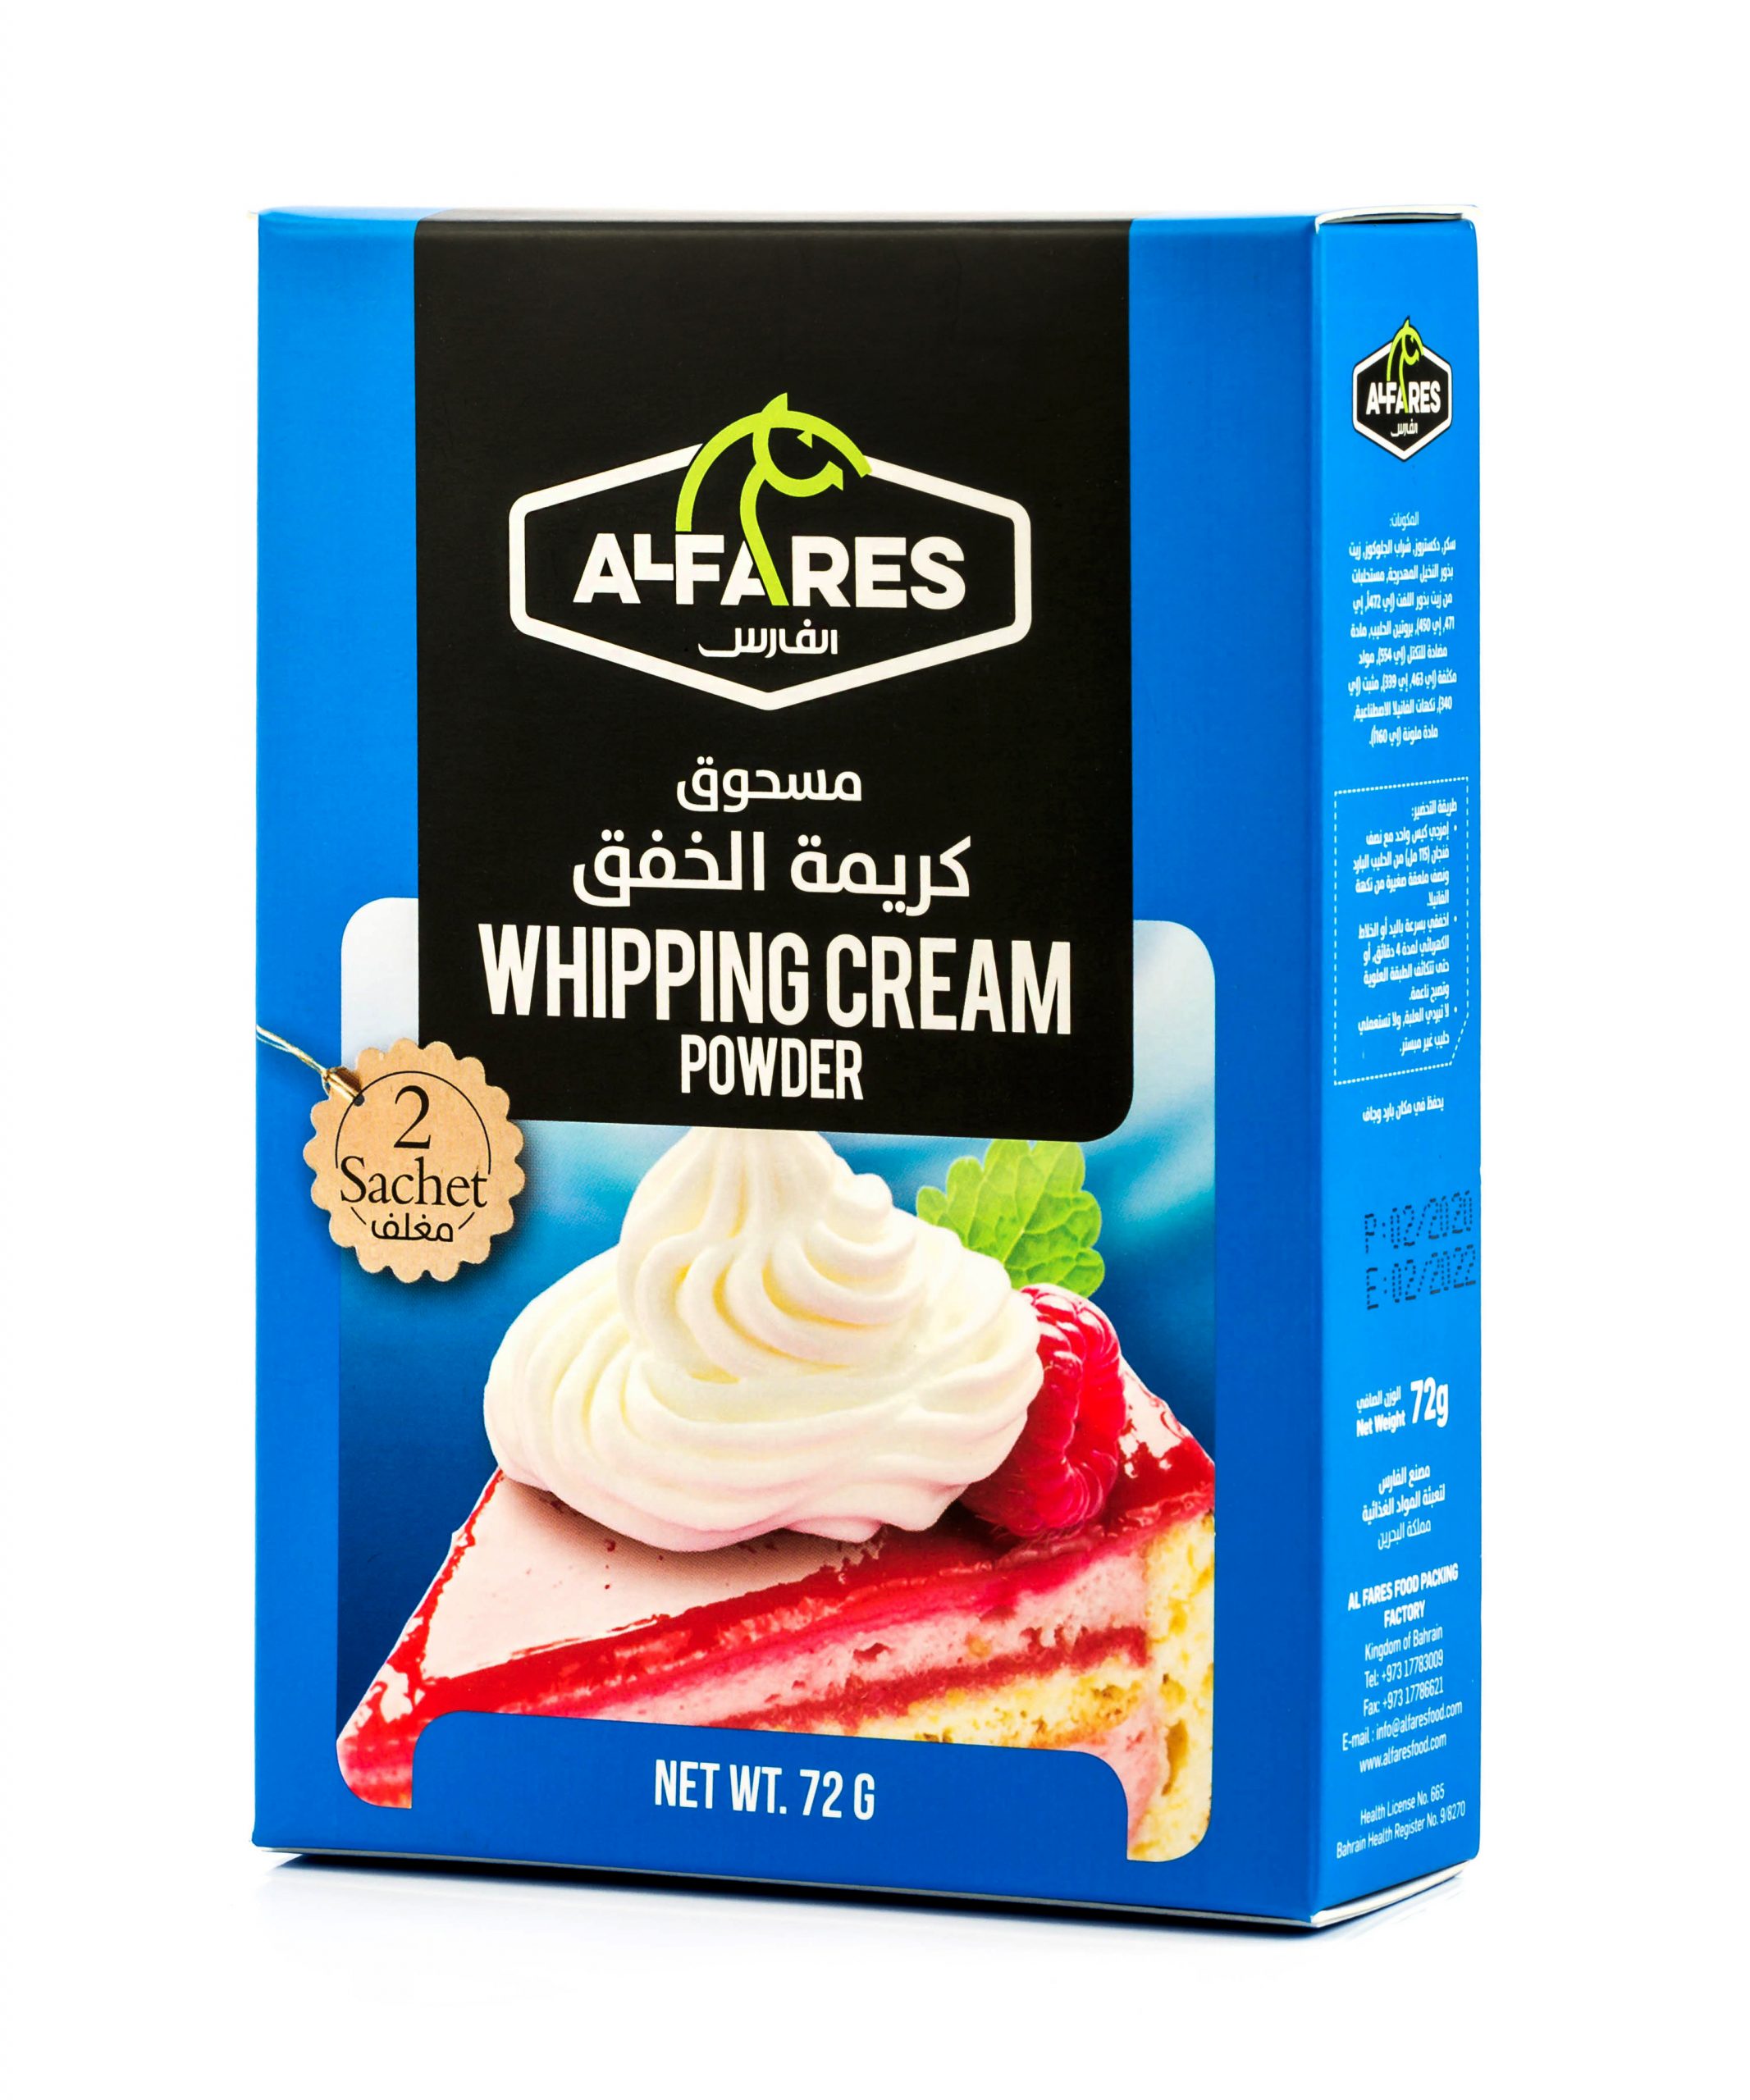 https://alfaresfood.com/wp-content/uploads/2017/06/Whipping-Cream-2-scaled.jpg